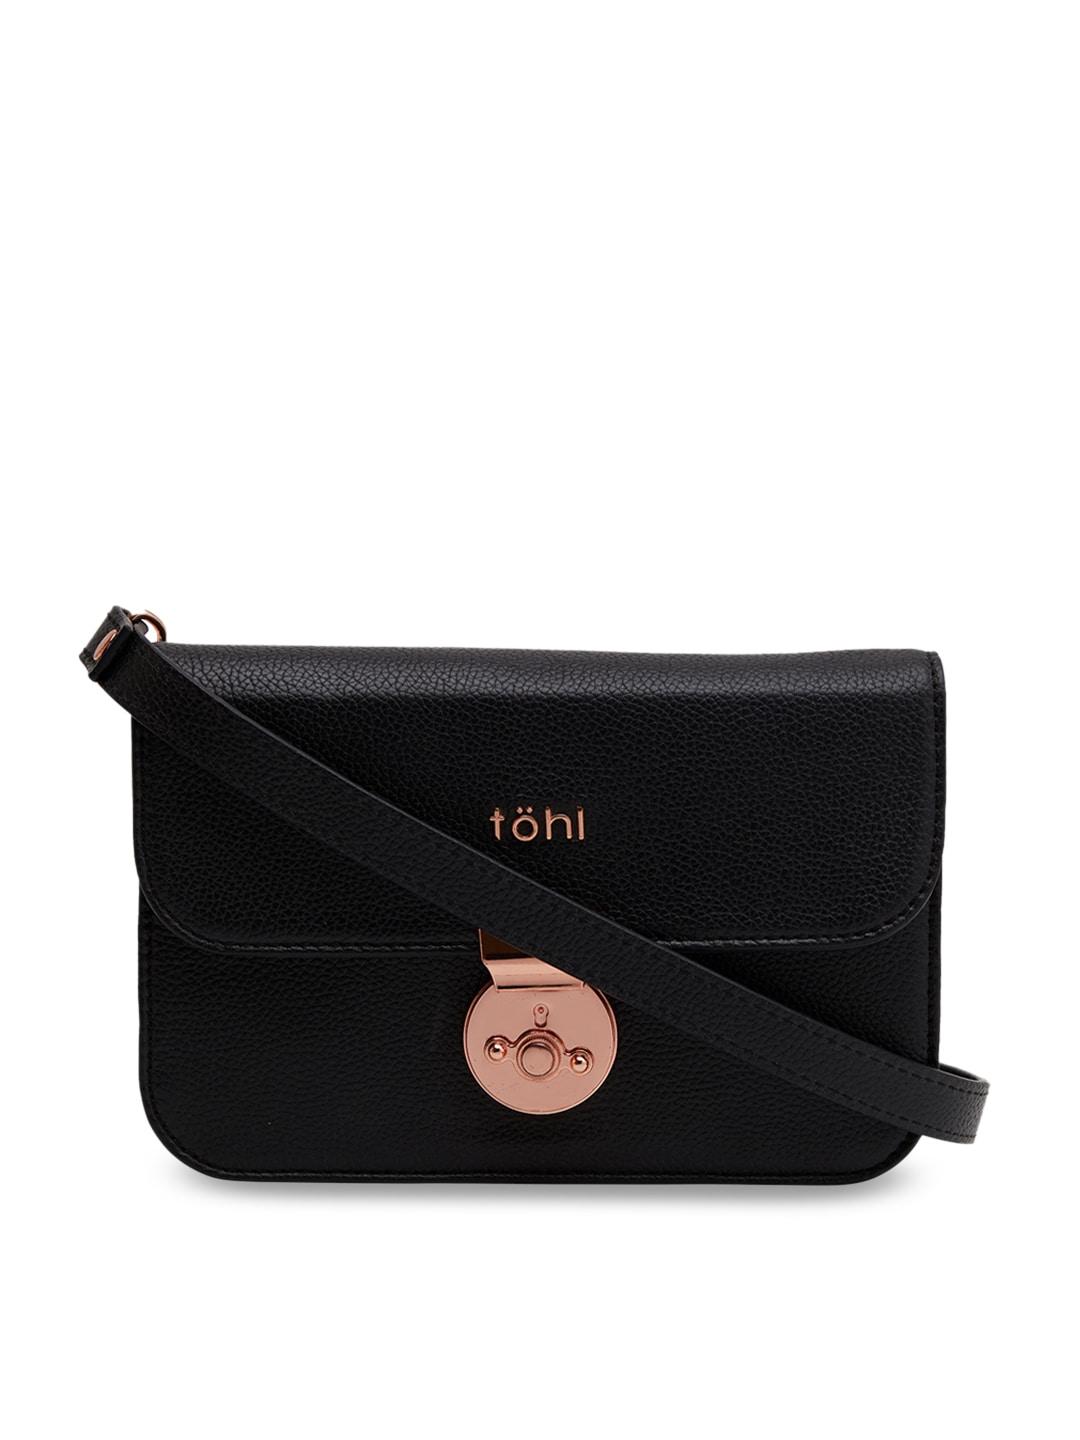 tohl Black Solid Leather Sling Bag